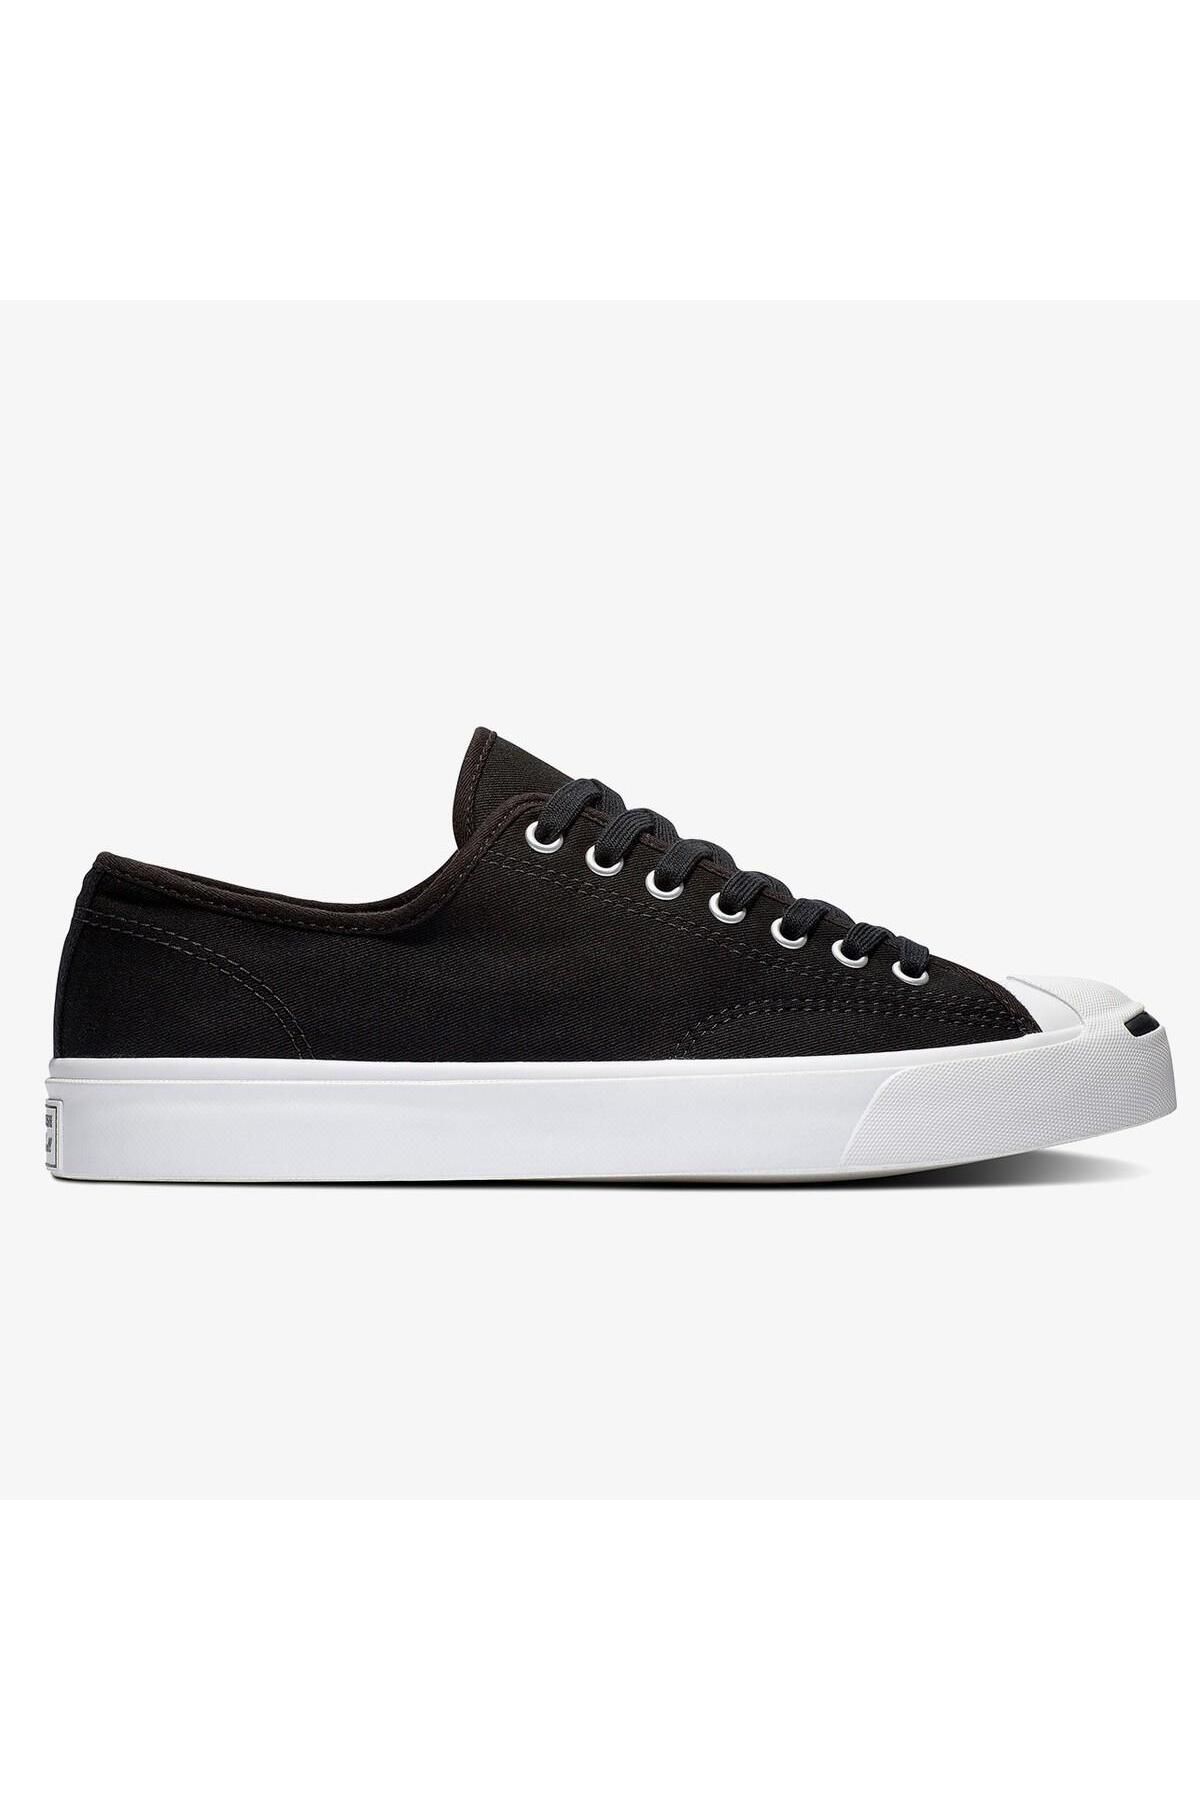 Converse 164056c Ayakkabı Siyah Beyaz